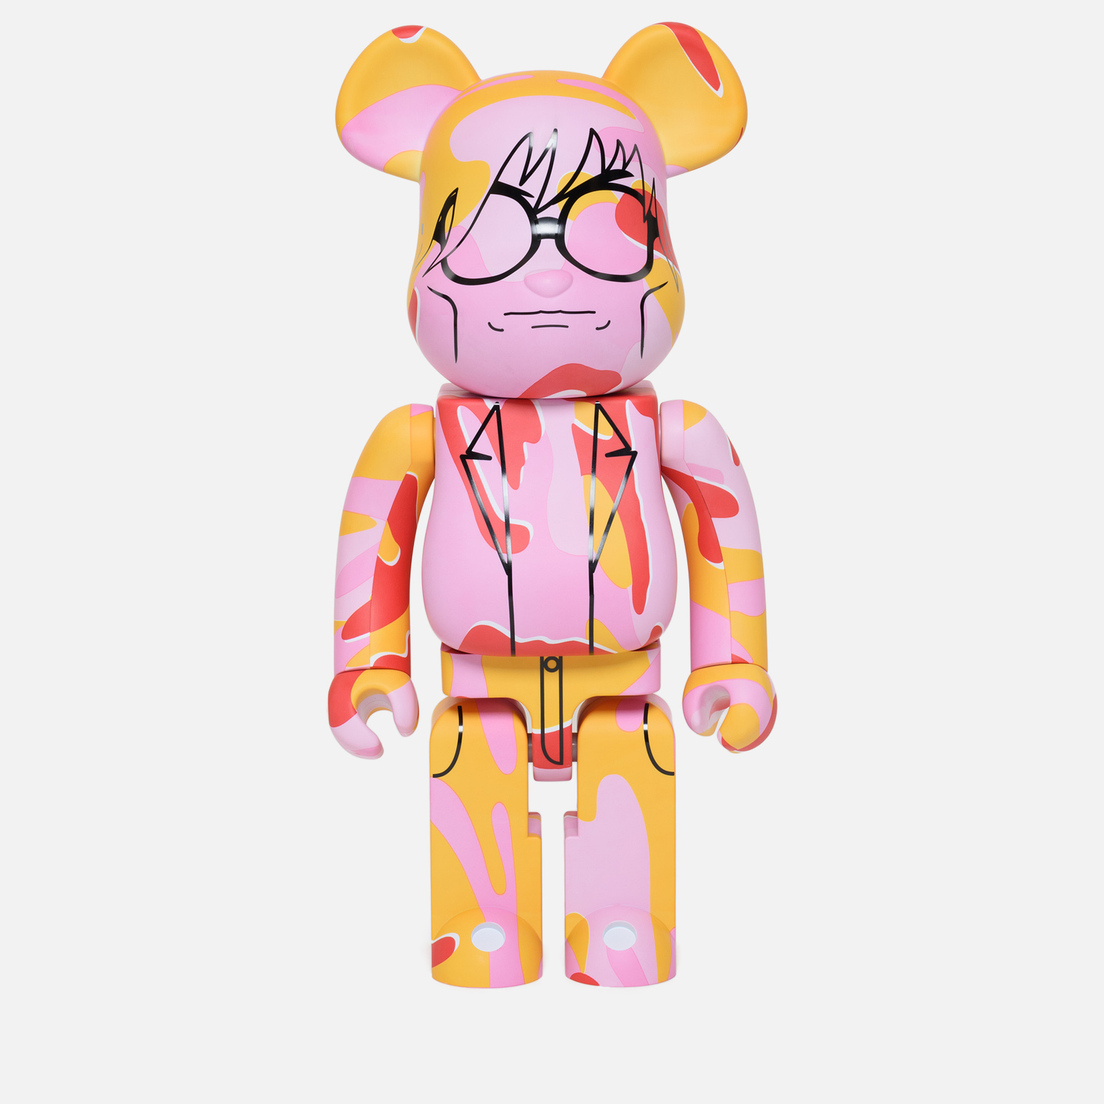 Medicom Toy Игрушка Bearbrick Andy Warhol Camo Pink 1000%